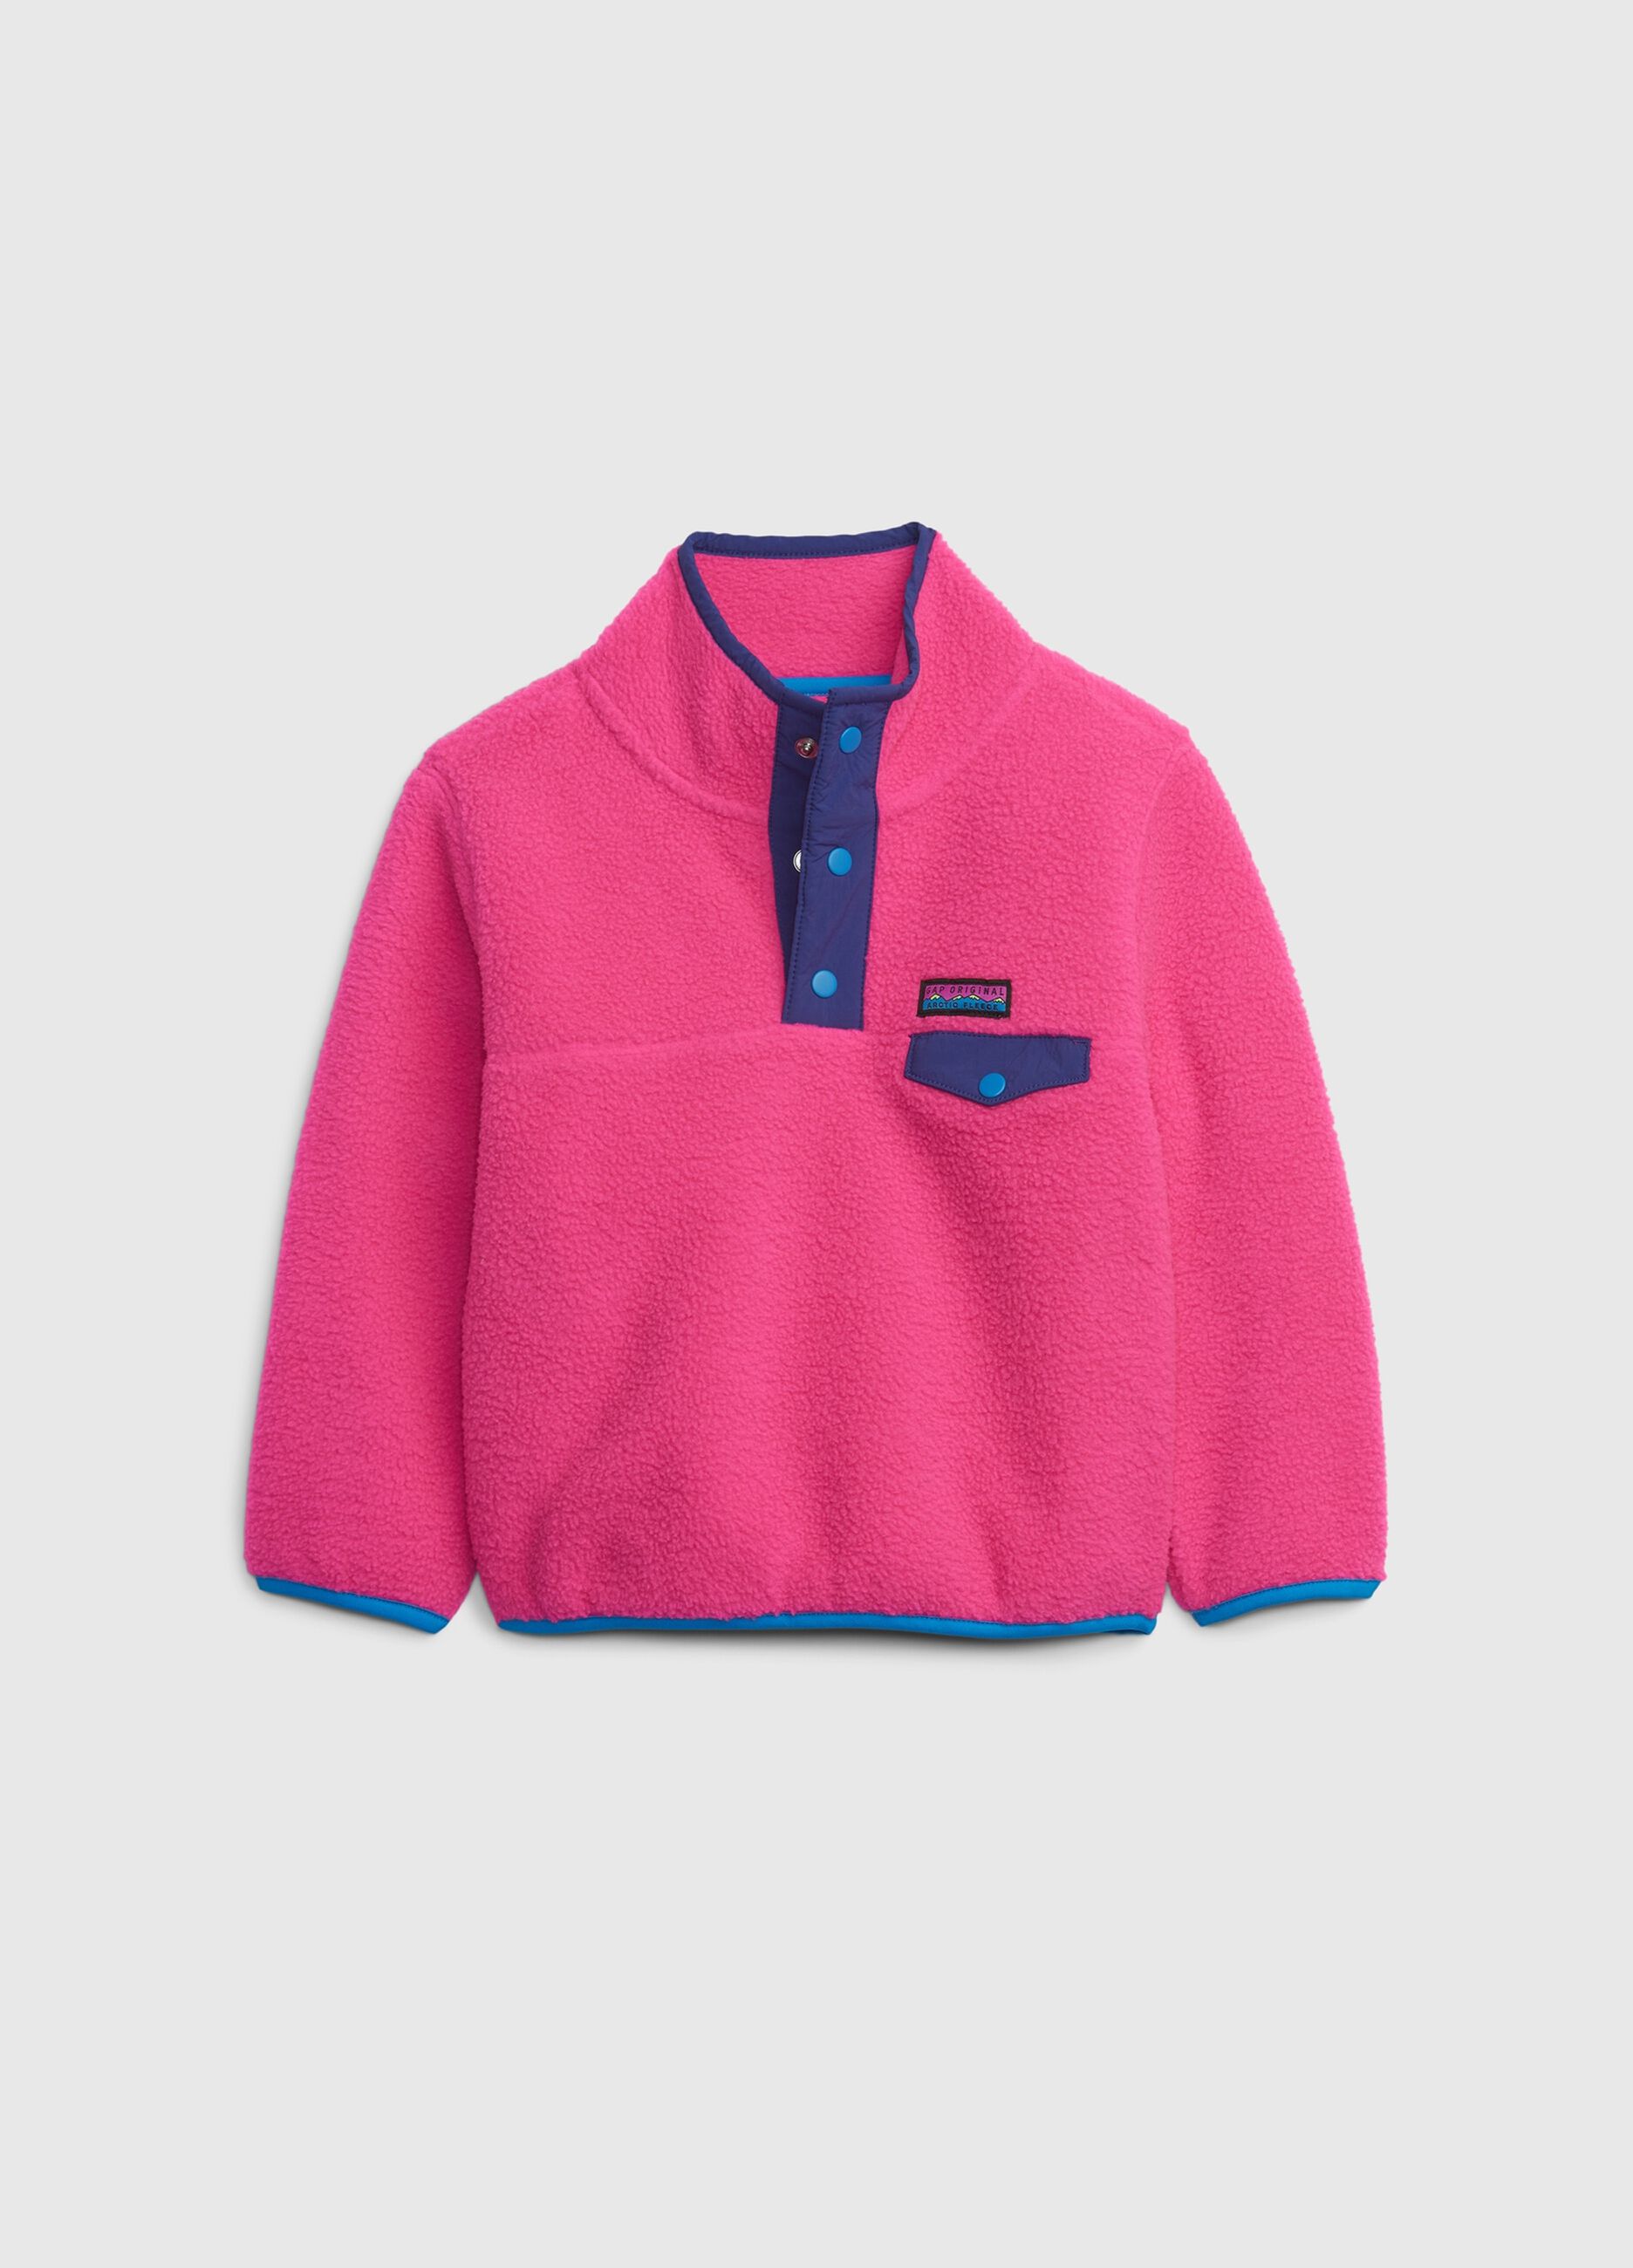 Fleece sweatshirt with snap-button fastening